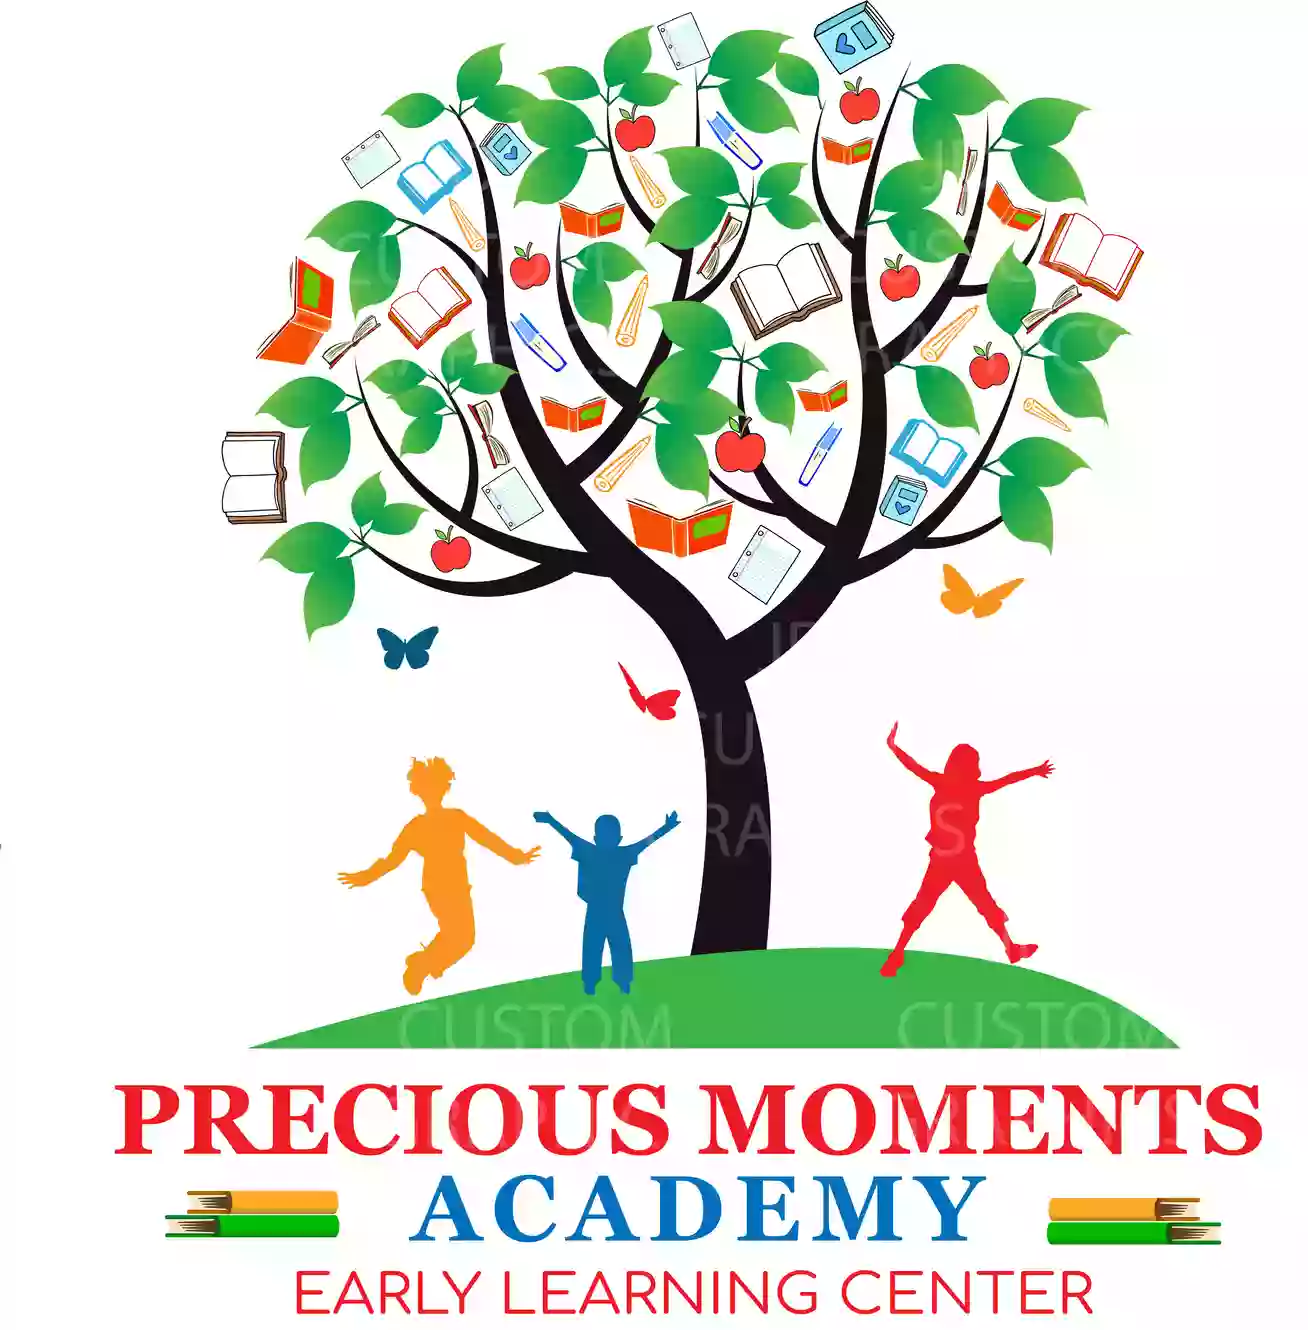 Precious Moments Academy, Inc